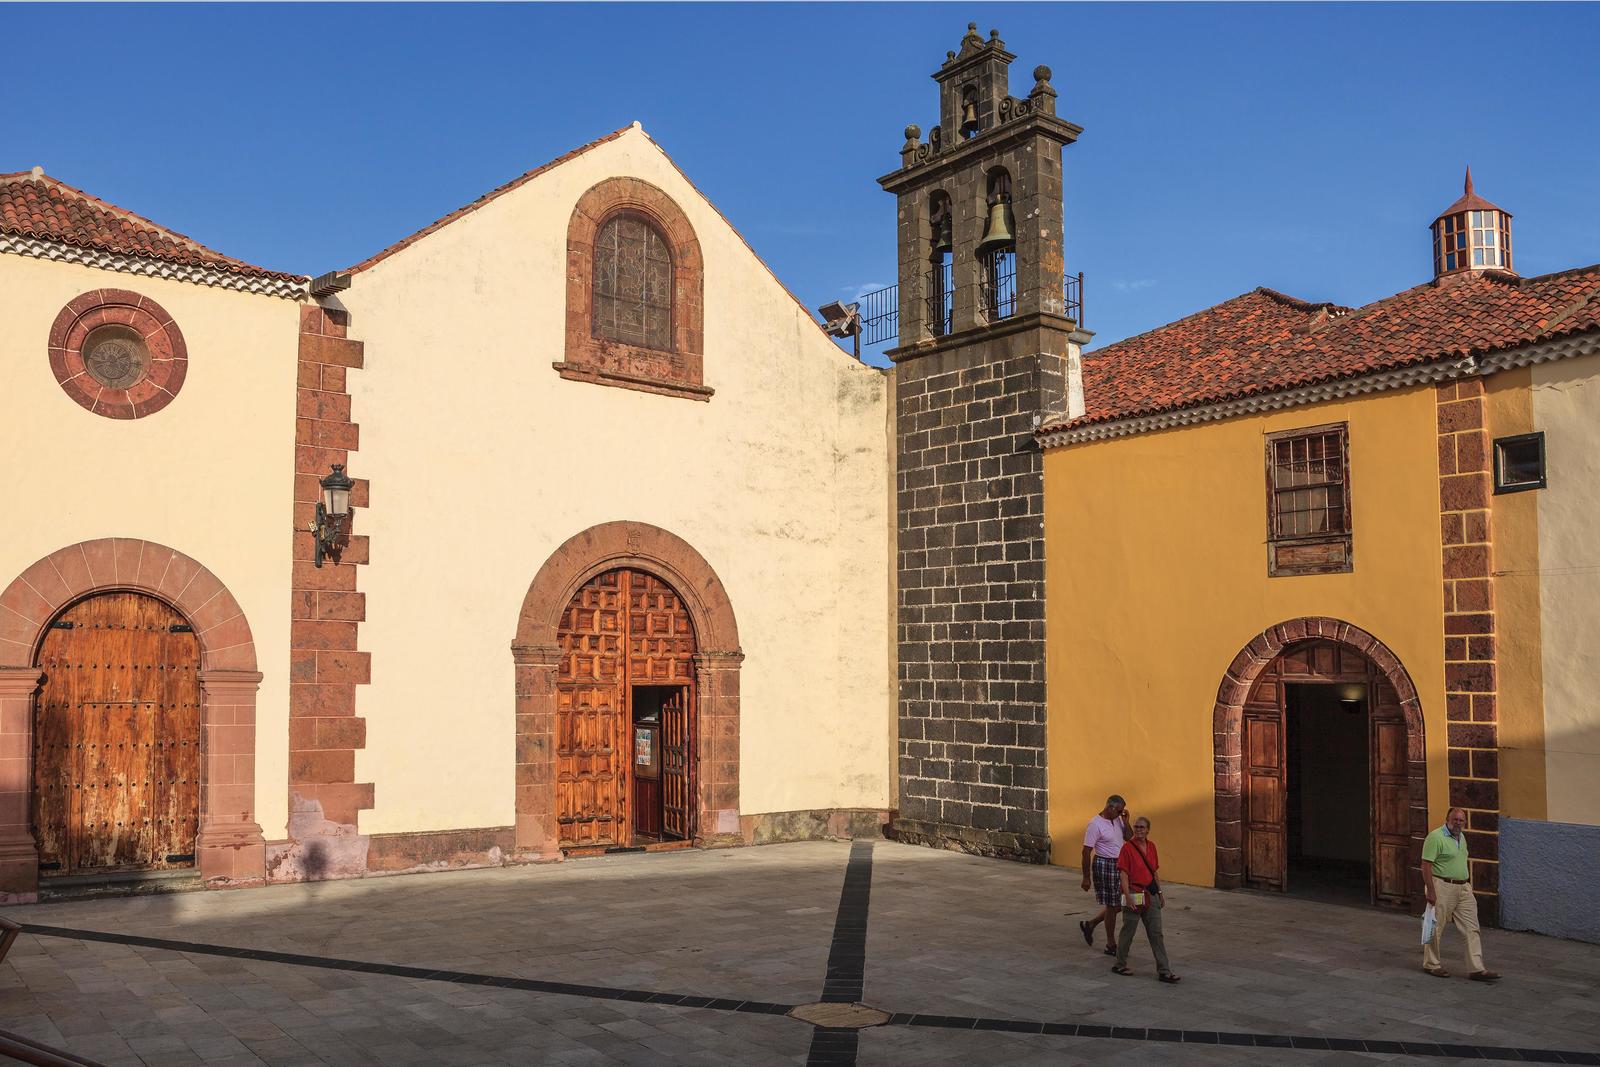 Tenerife, Canary Islands (E) – Church of the Saint Dominic of Guzmán, San Cristóbal de La Laguna